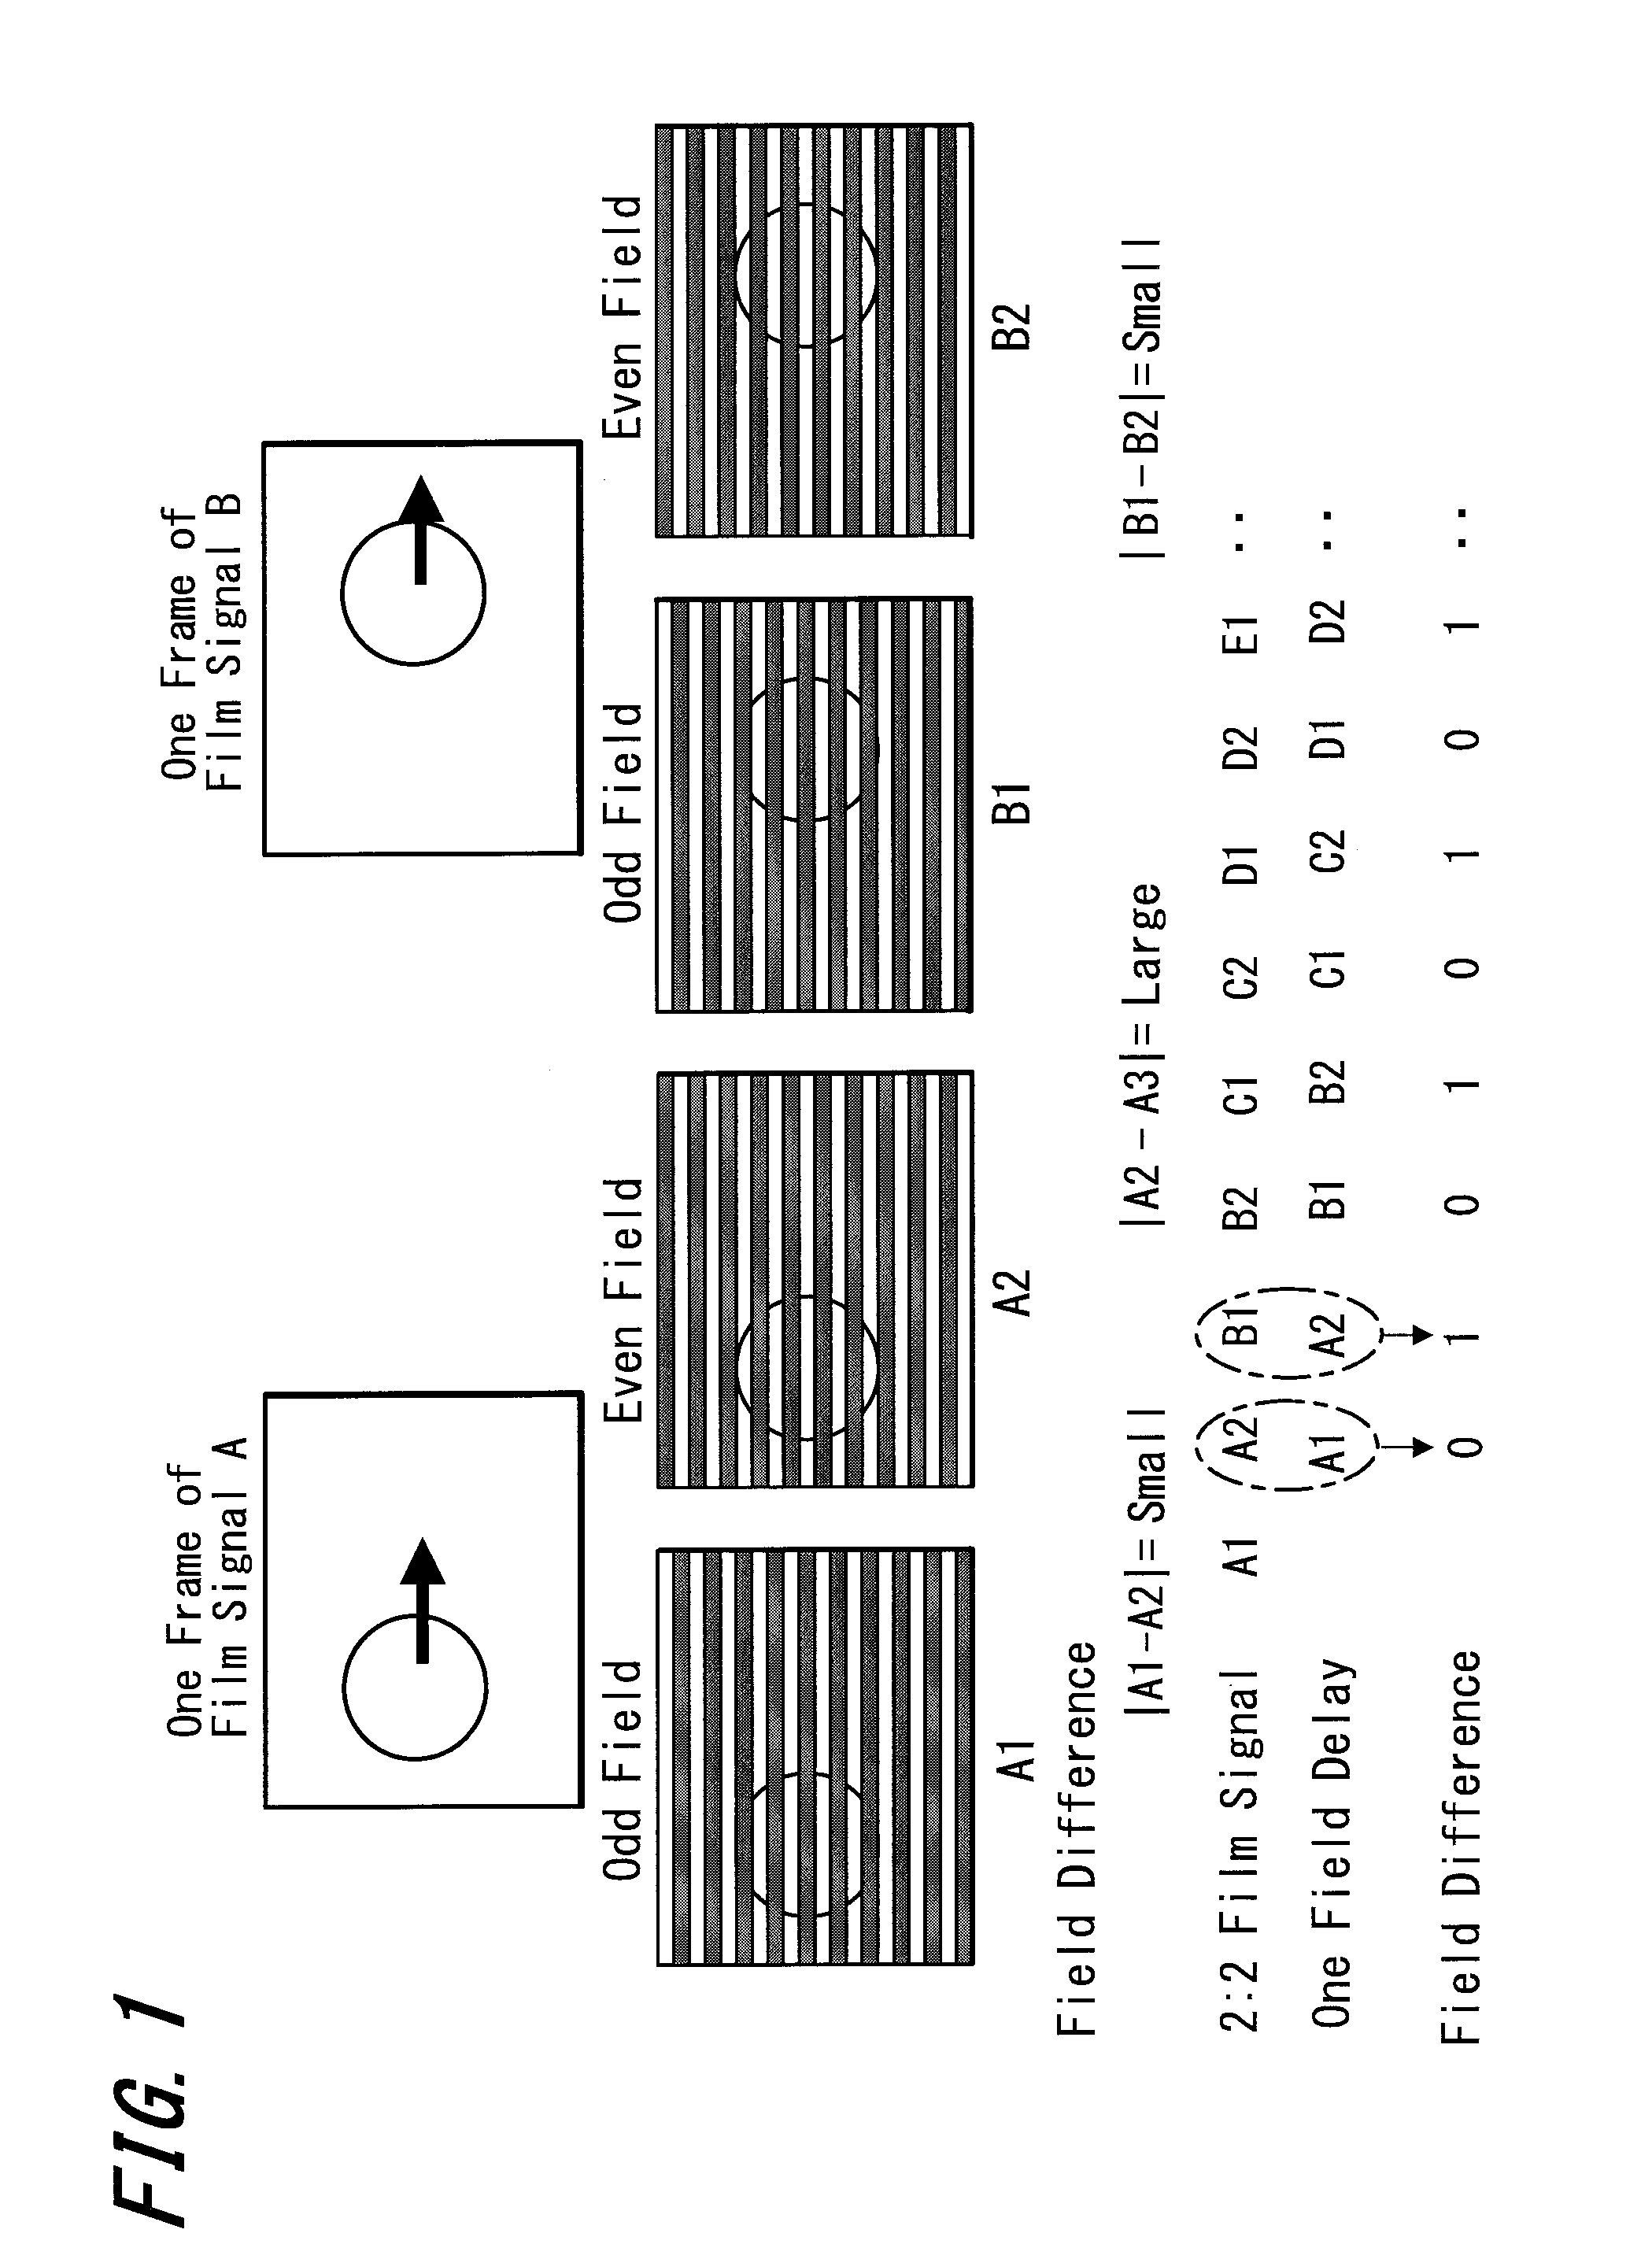 Video Signal Processing Apparatus and Image Display Apparatus